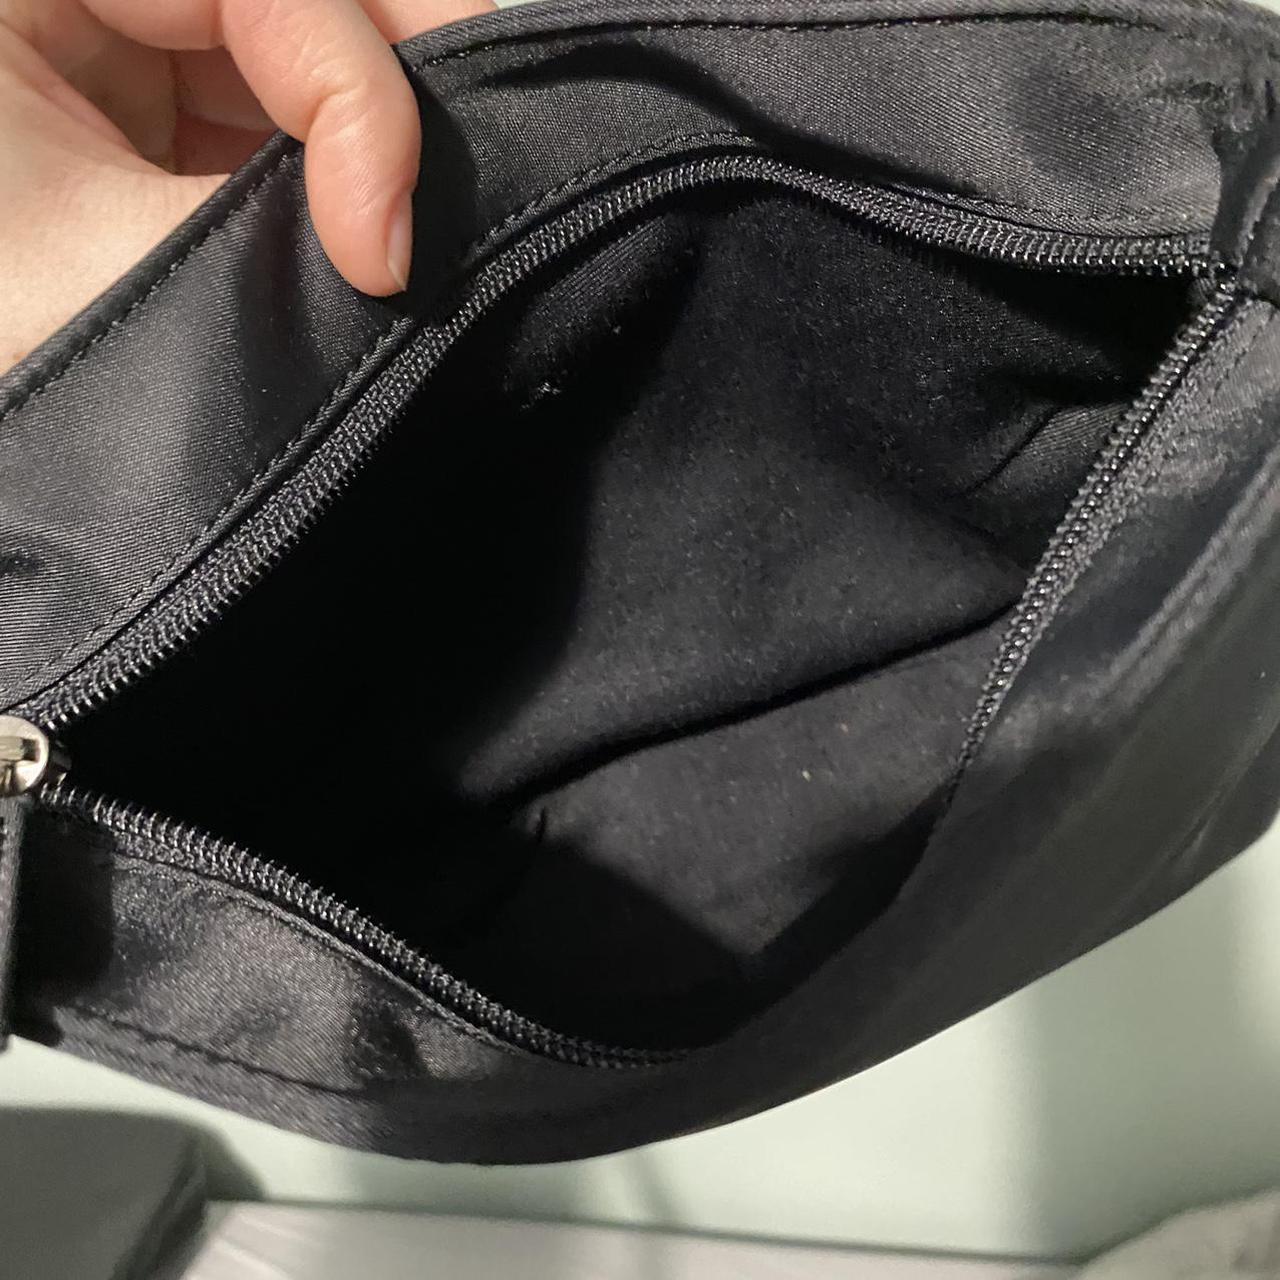 Product Image 3 - Small black guess bag

Crossbody bag